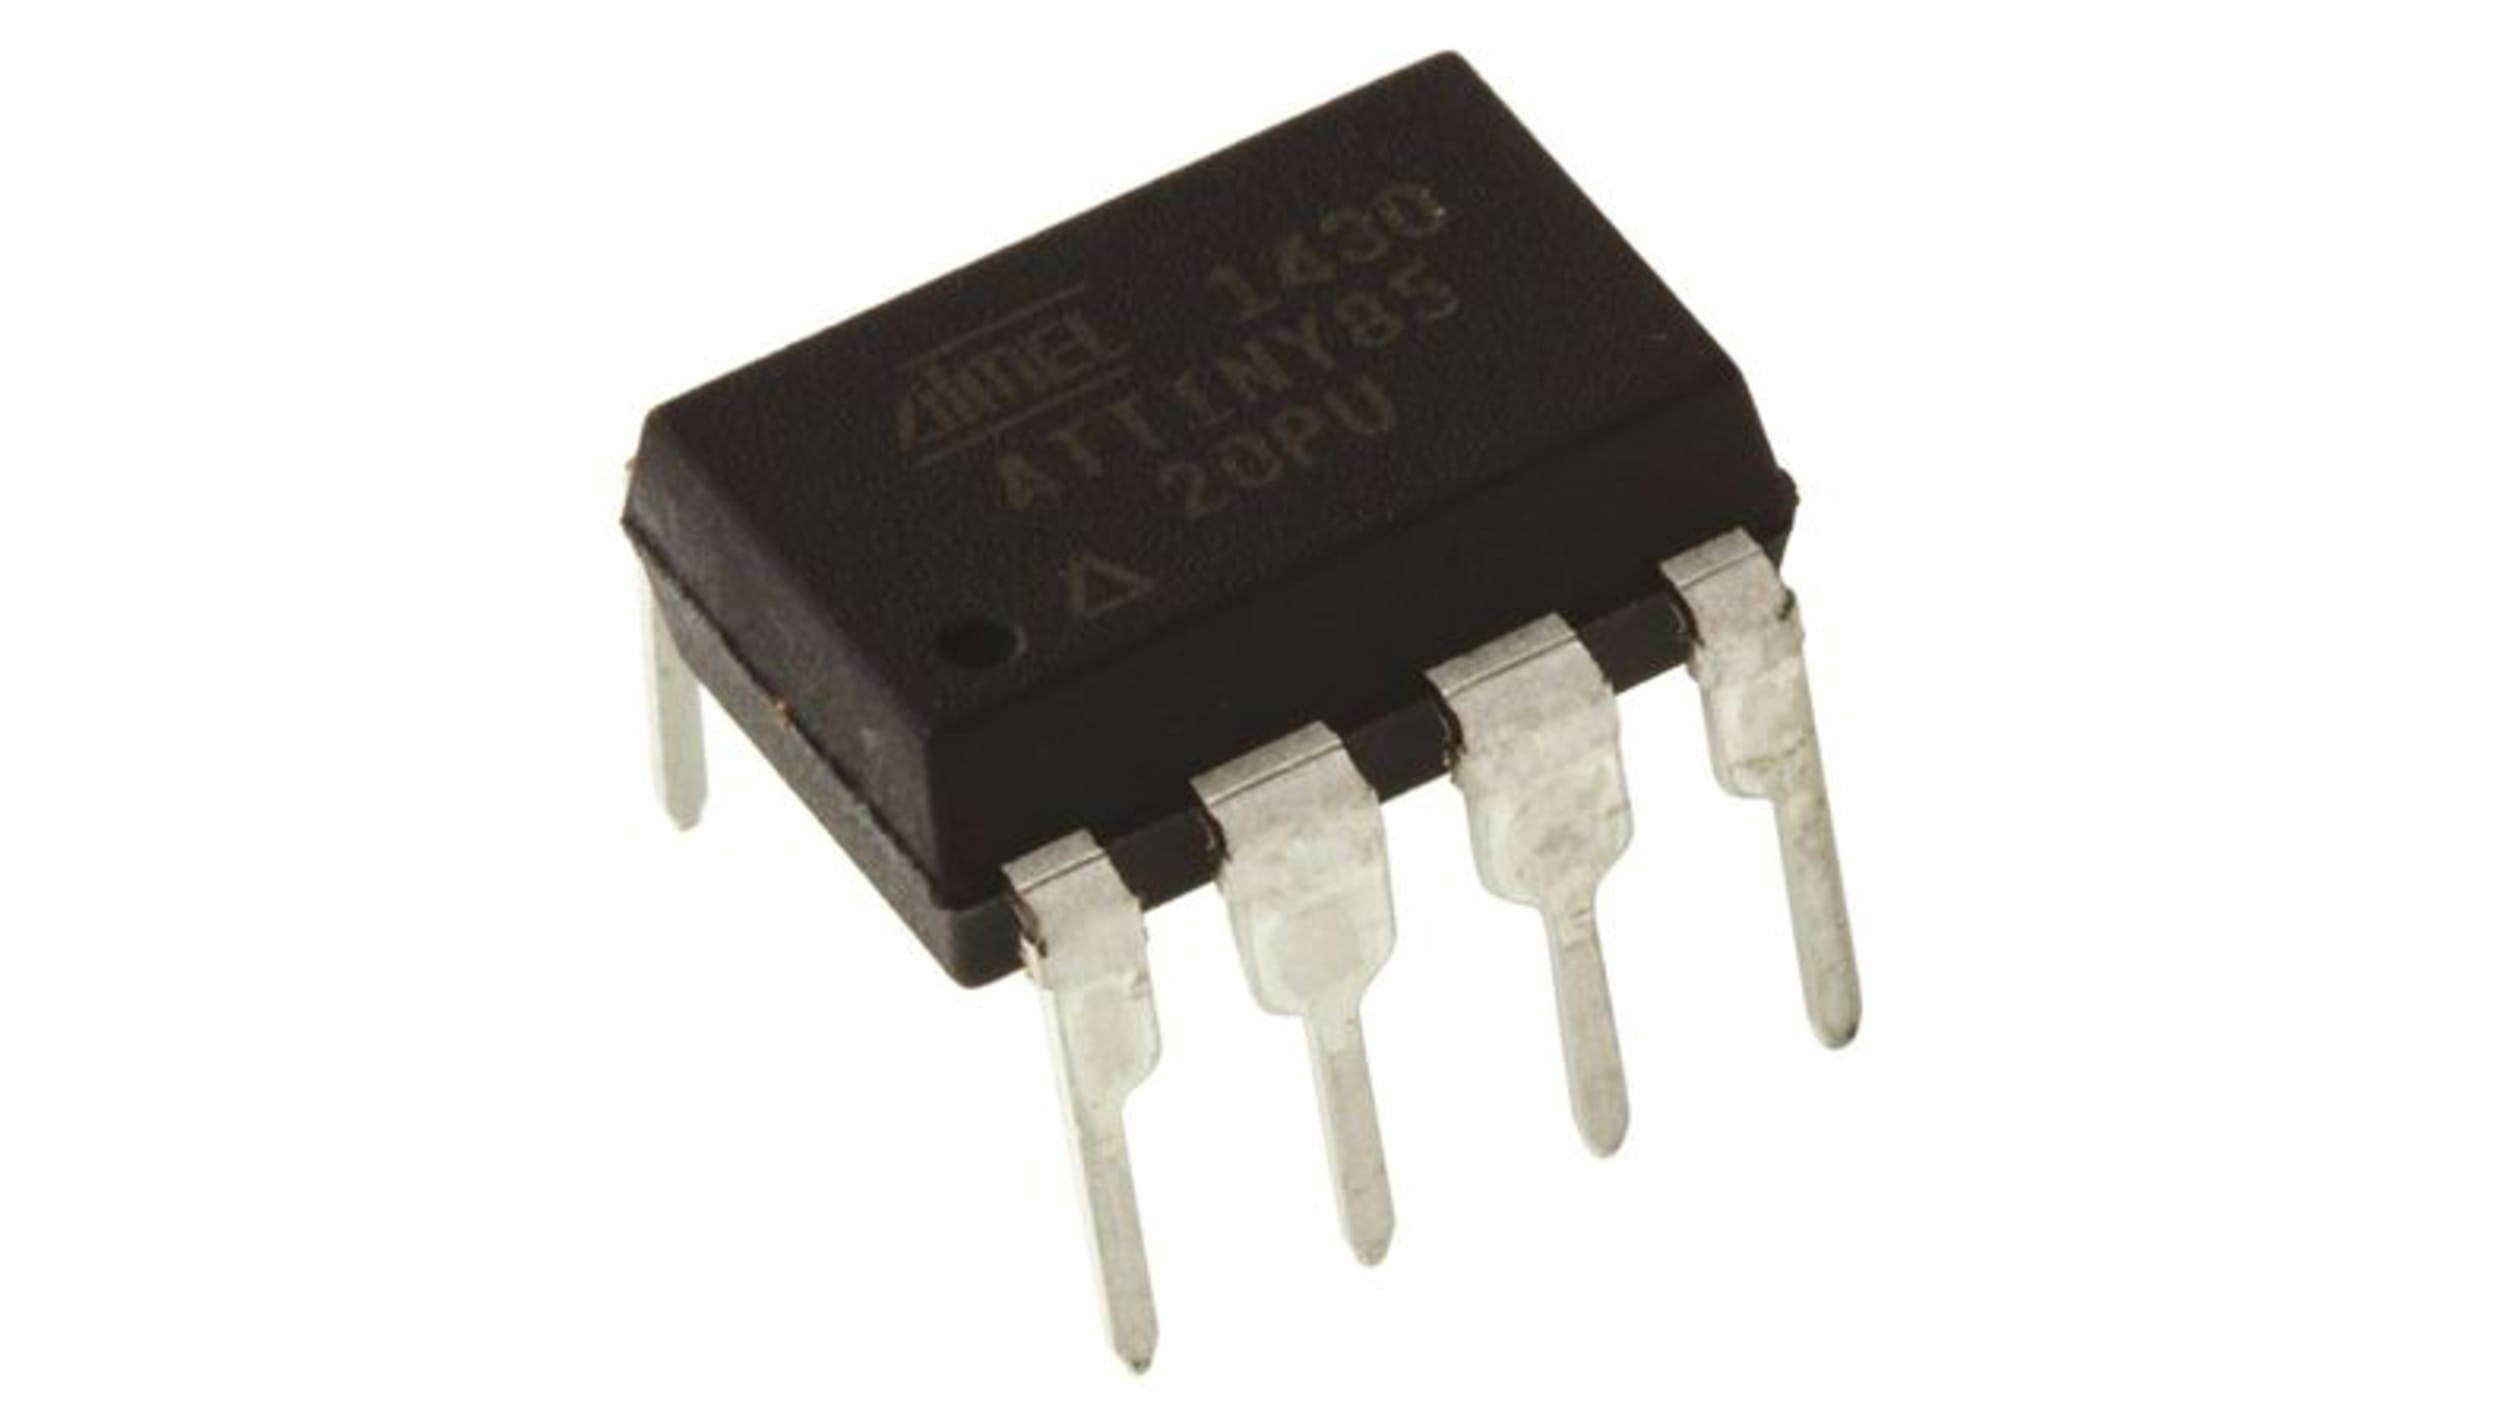 ATTiny85-20PU 8-bit ATMEL Microcontroller